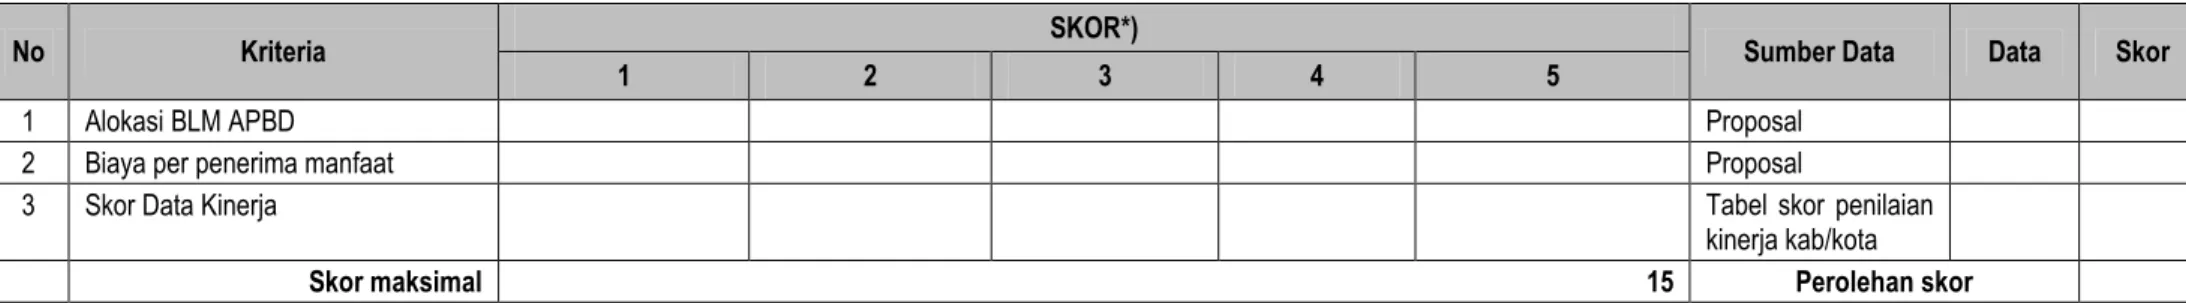 Tabel Perhitungan Skor Akhir Proposal Kabupaten/Kota 